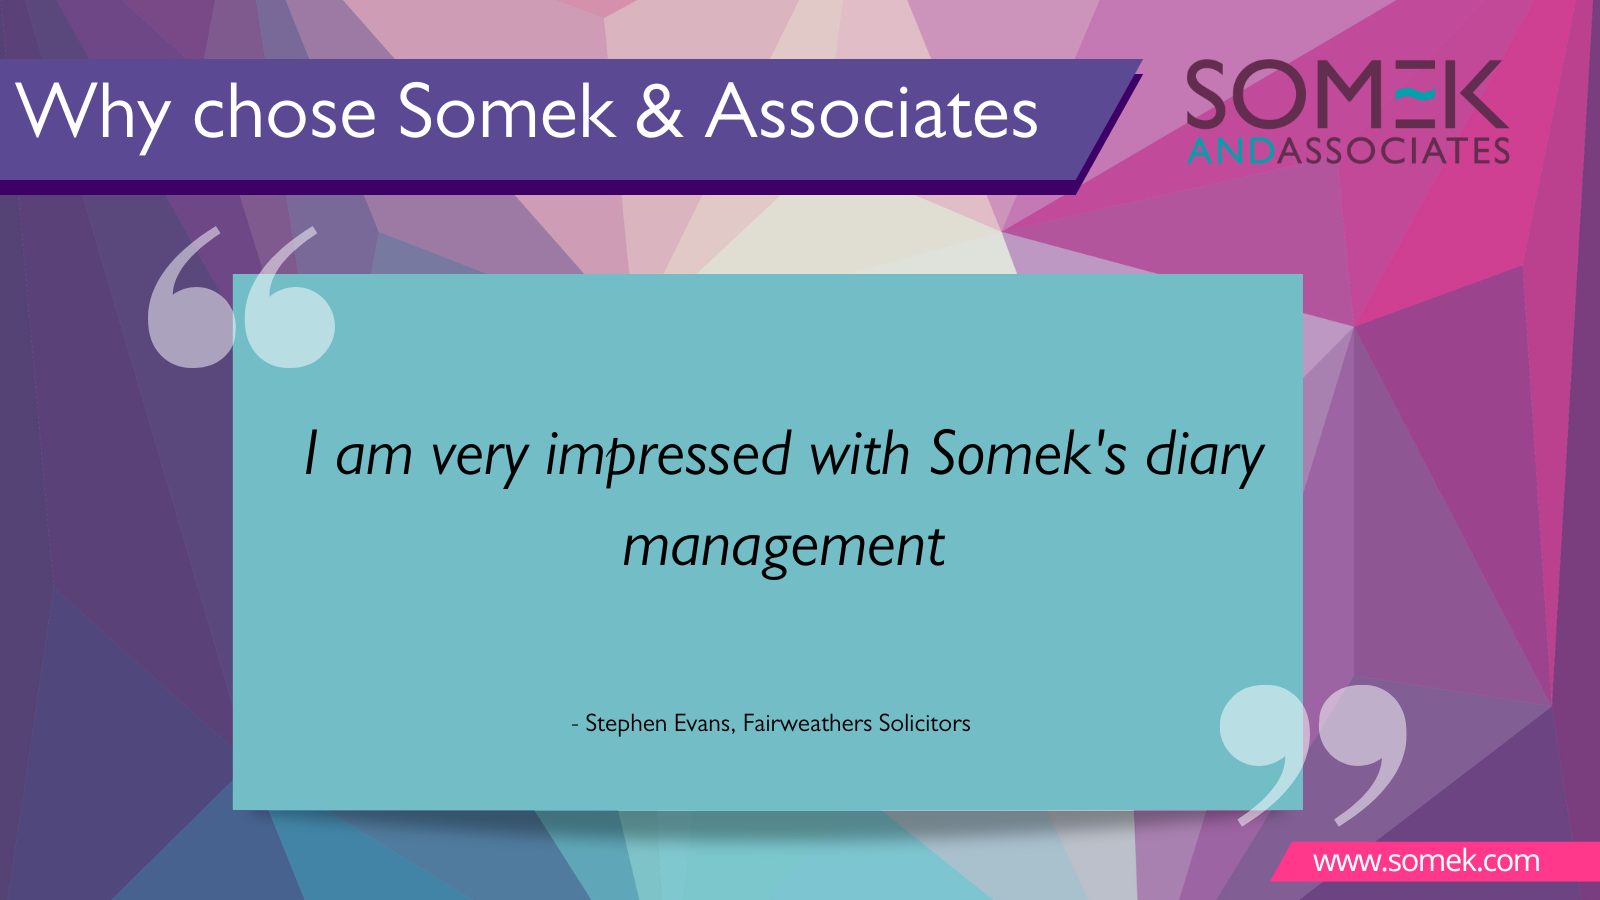 Top 5 Reasons For Choosing Somek & Associates